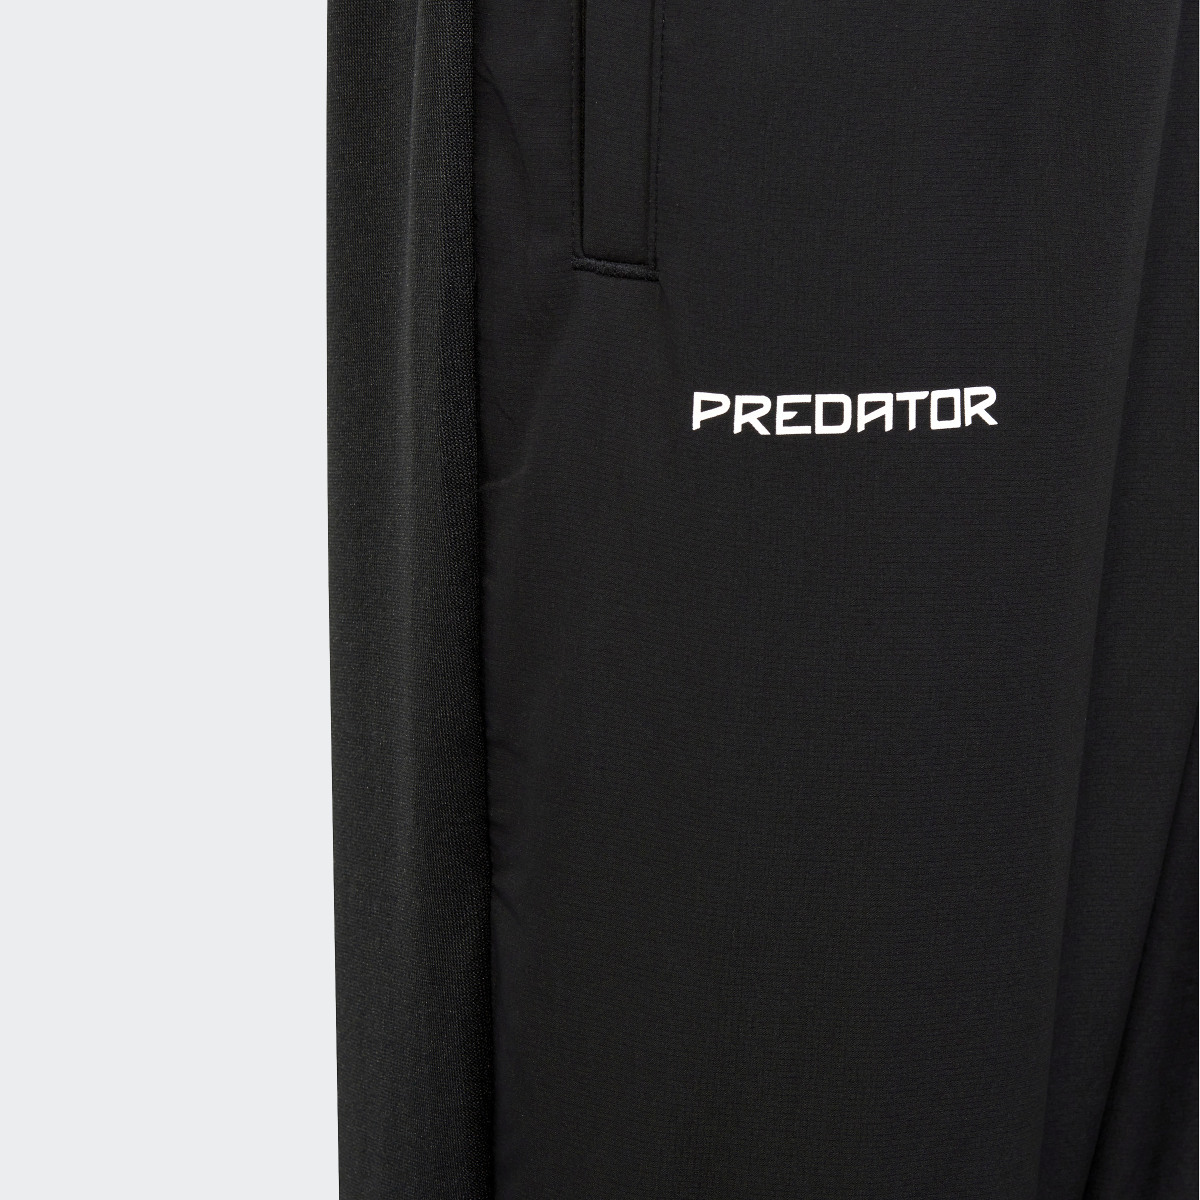 Adidas Football-Inspired Predator Pants. 7